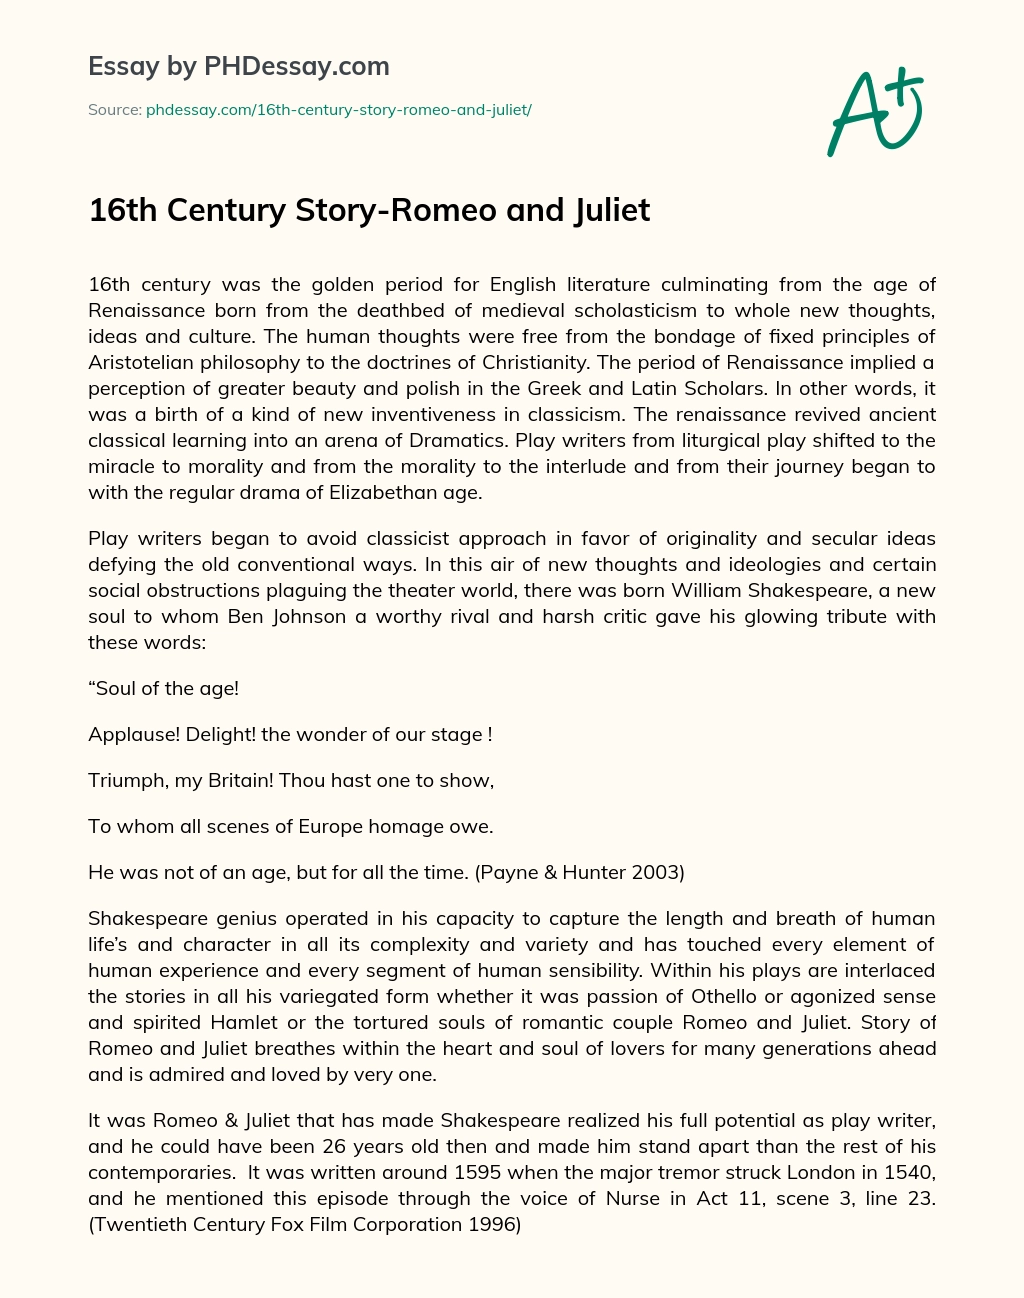 16th Century Story-Romeo and Juliet essay